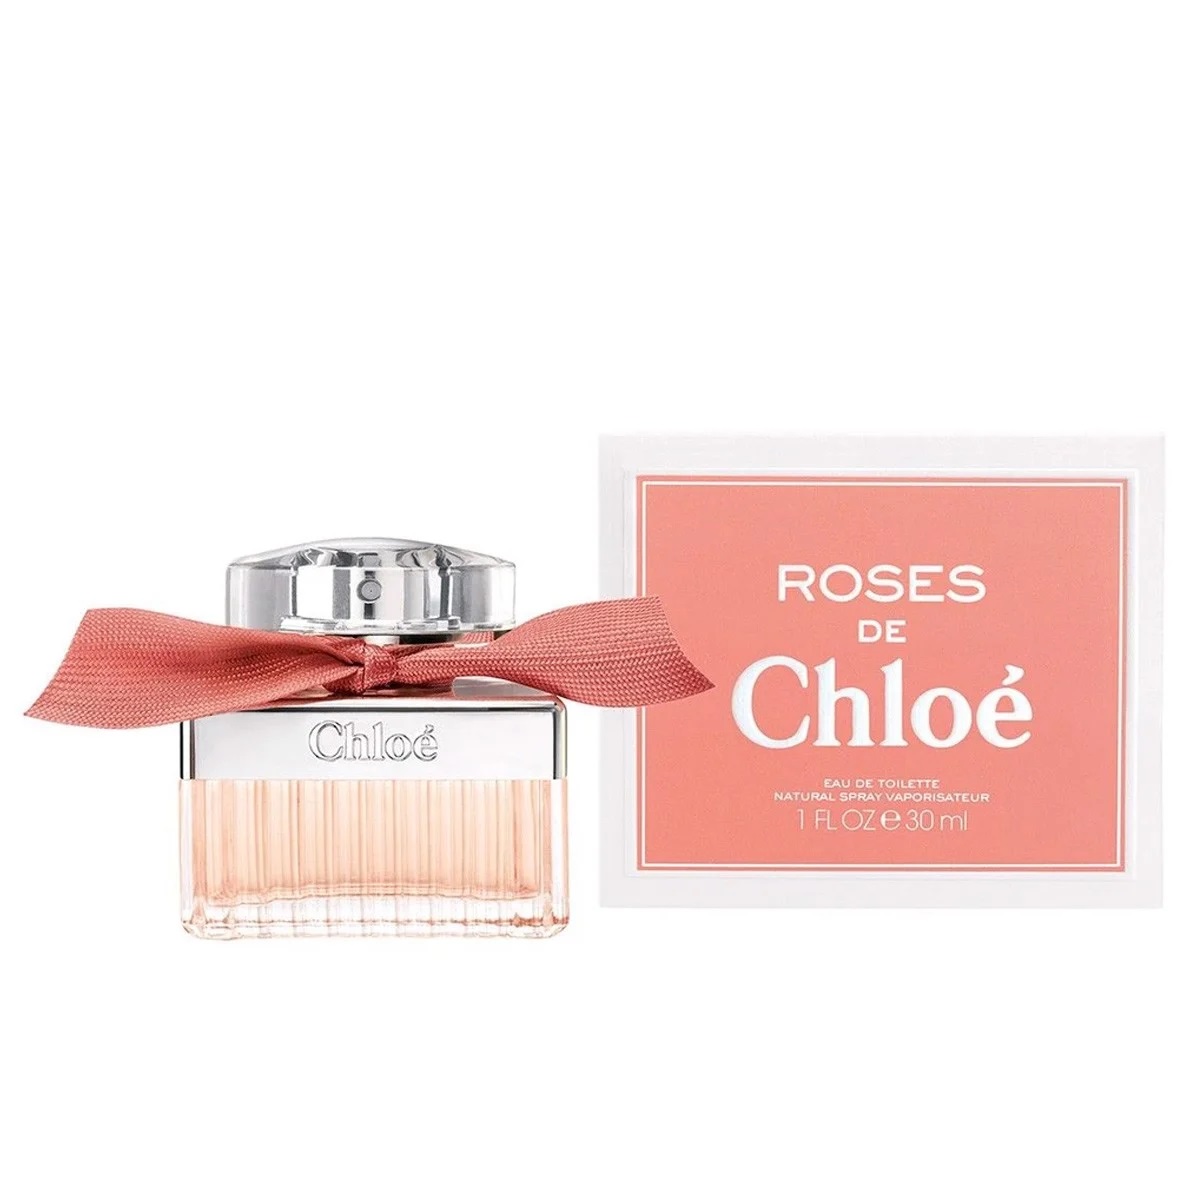 NƯỚC HOA NỮ CHLOE ROSES DE CHLOE EDT 1